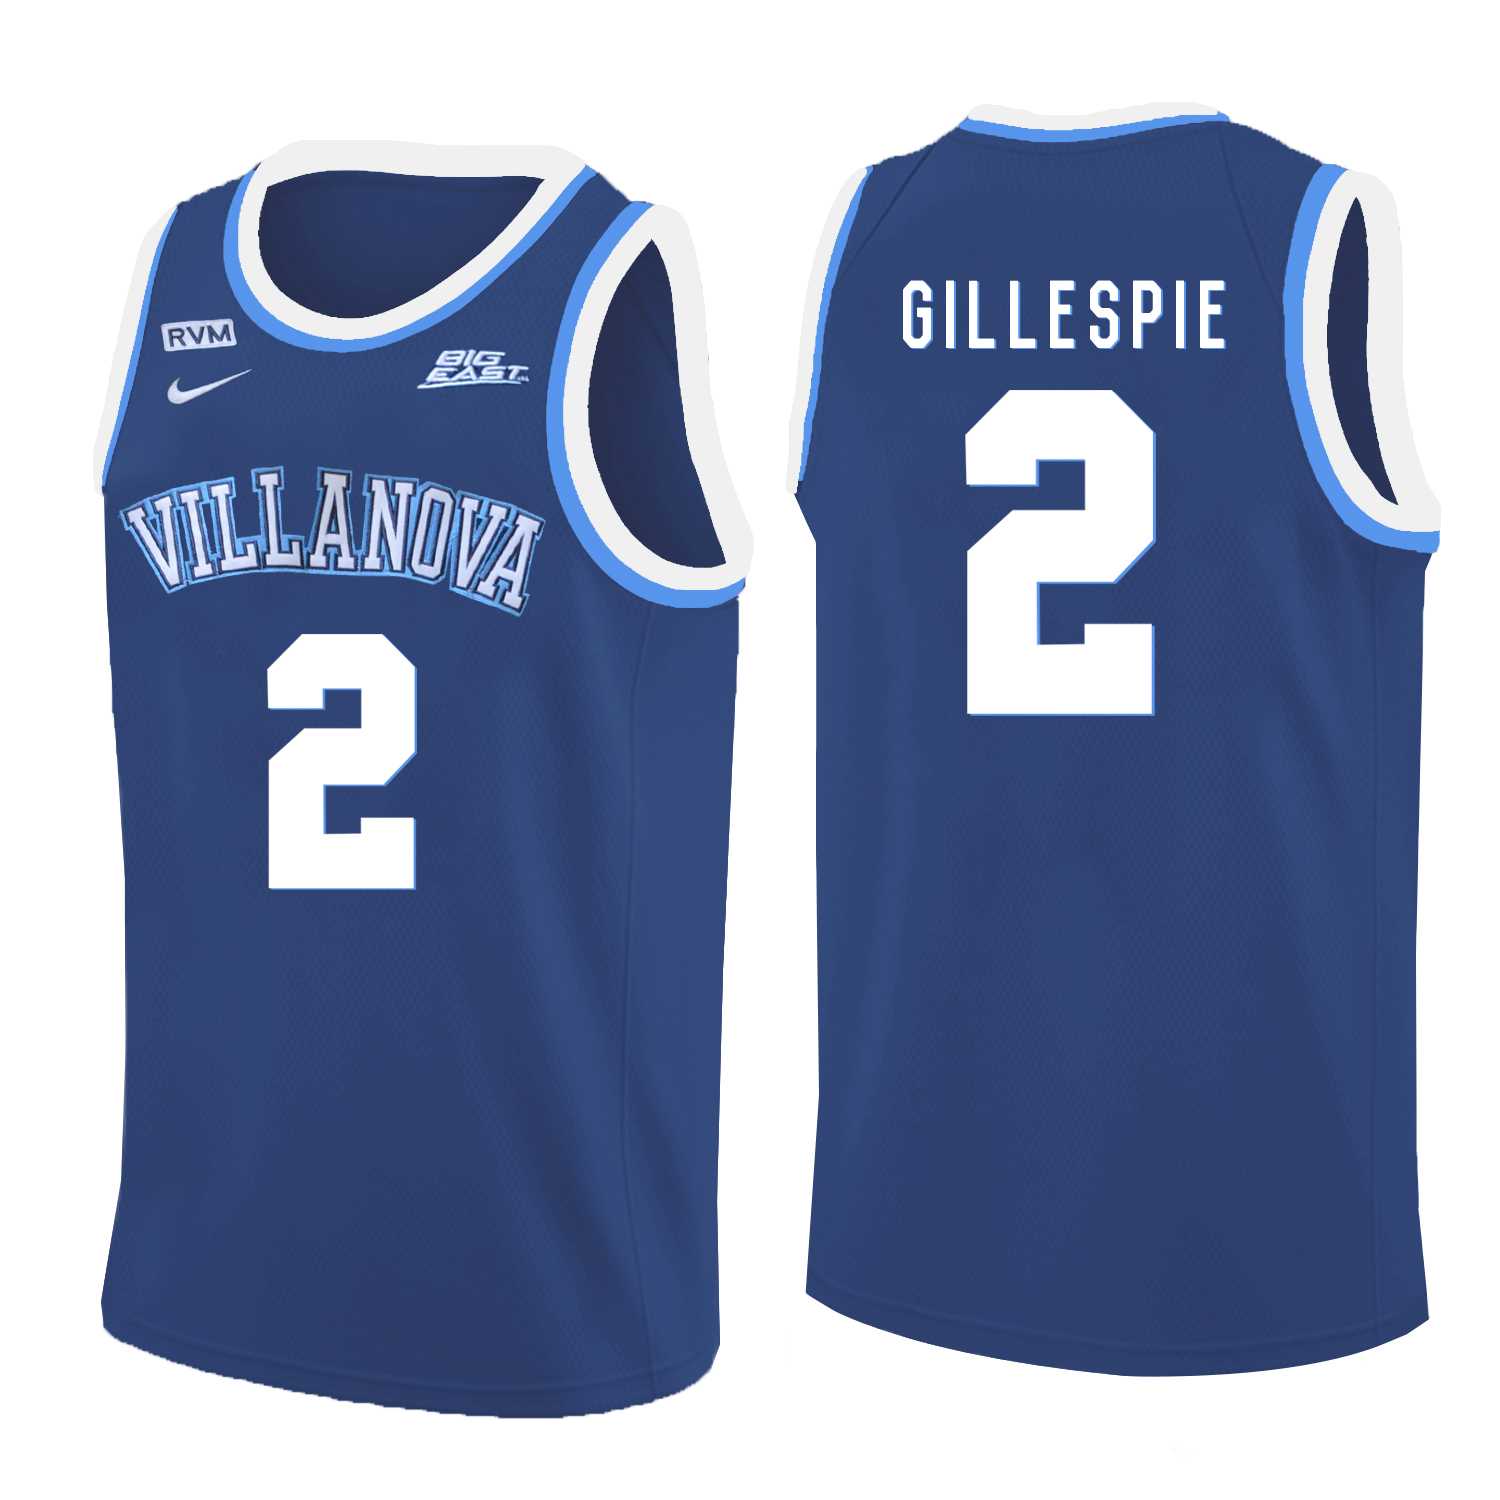 Villanova Wildcats #2 Collin Gillespie Blue College Basketball Jersey